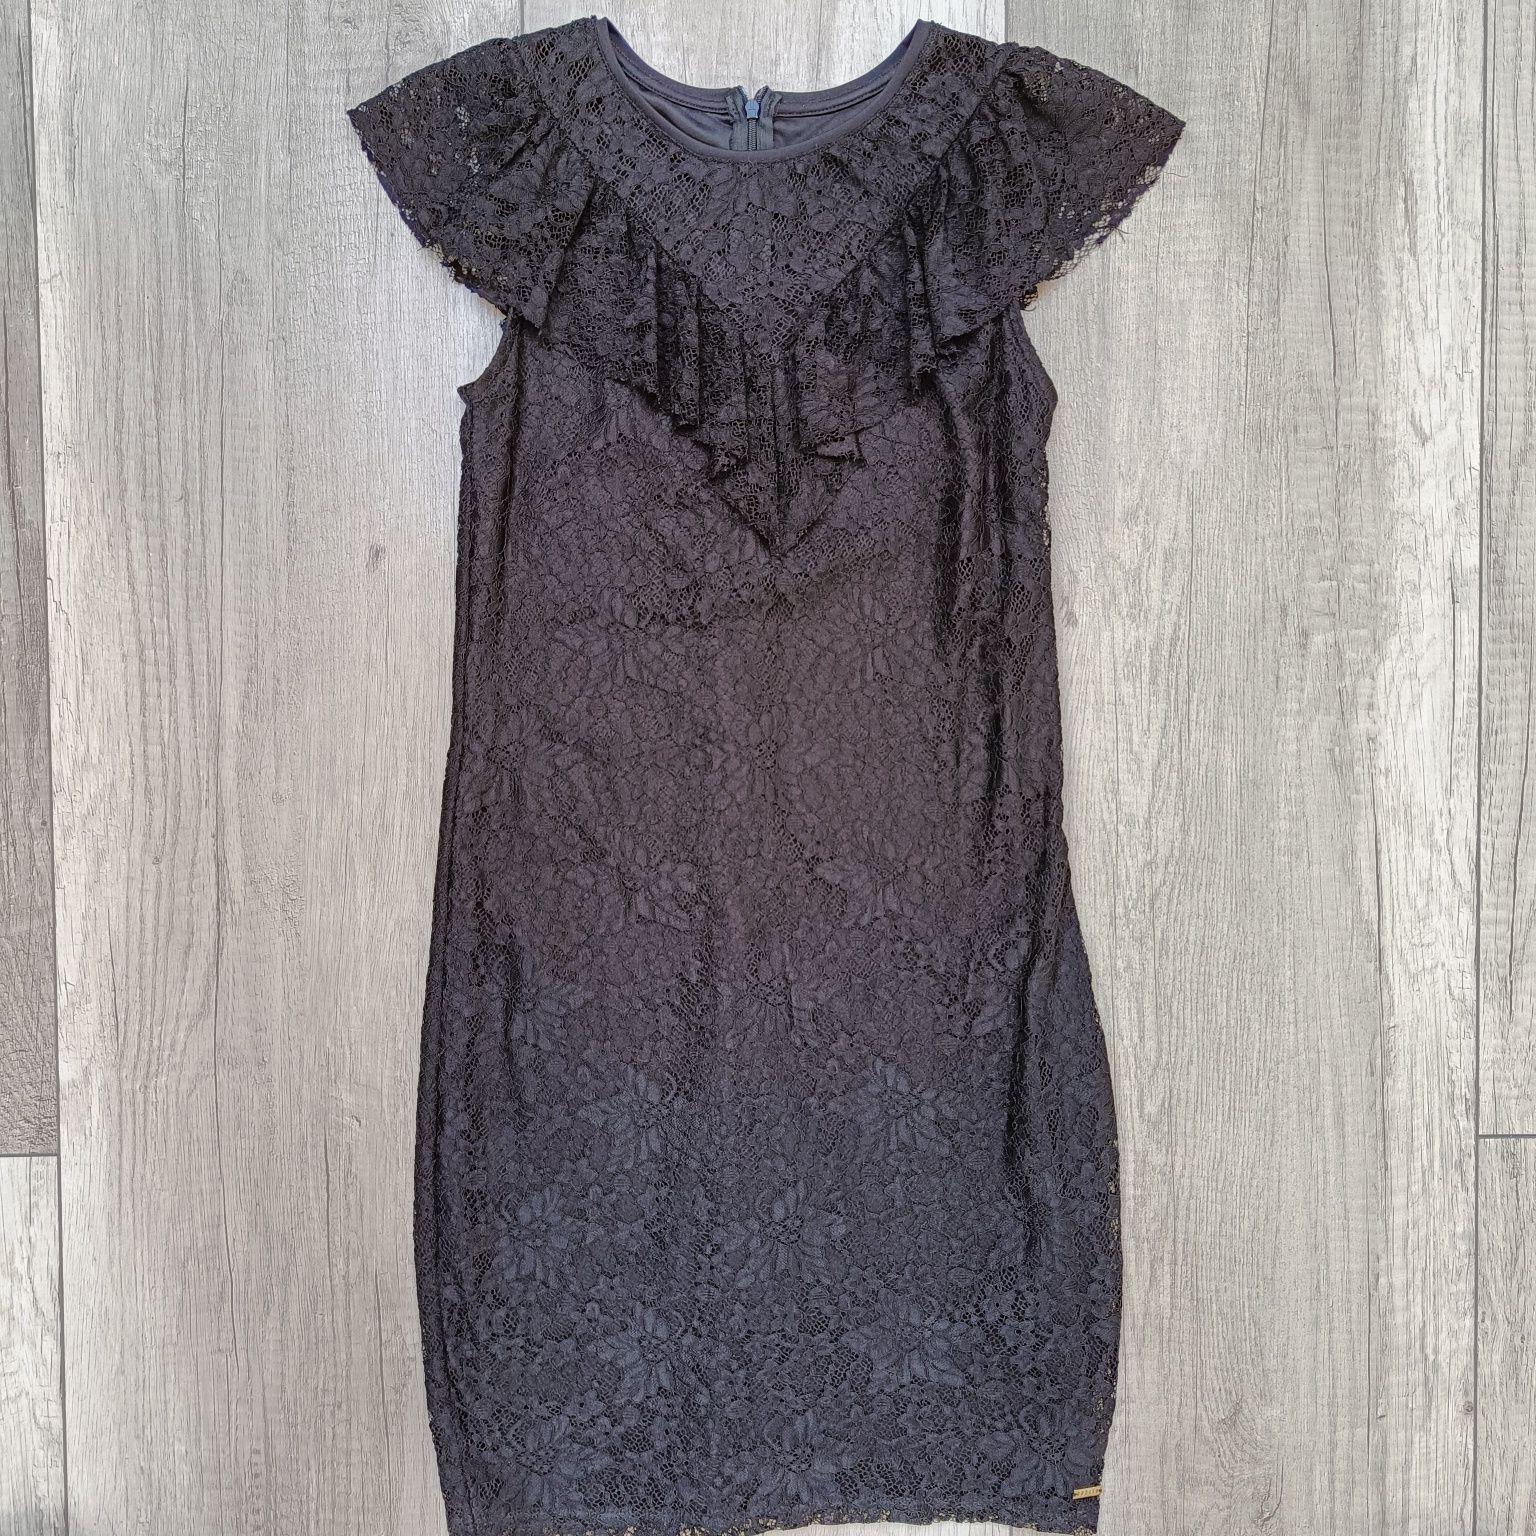 Czarna, koronkowa sukienka, ażurowa, Mohito, rozmiar M / 38